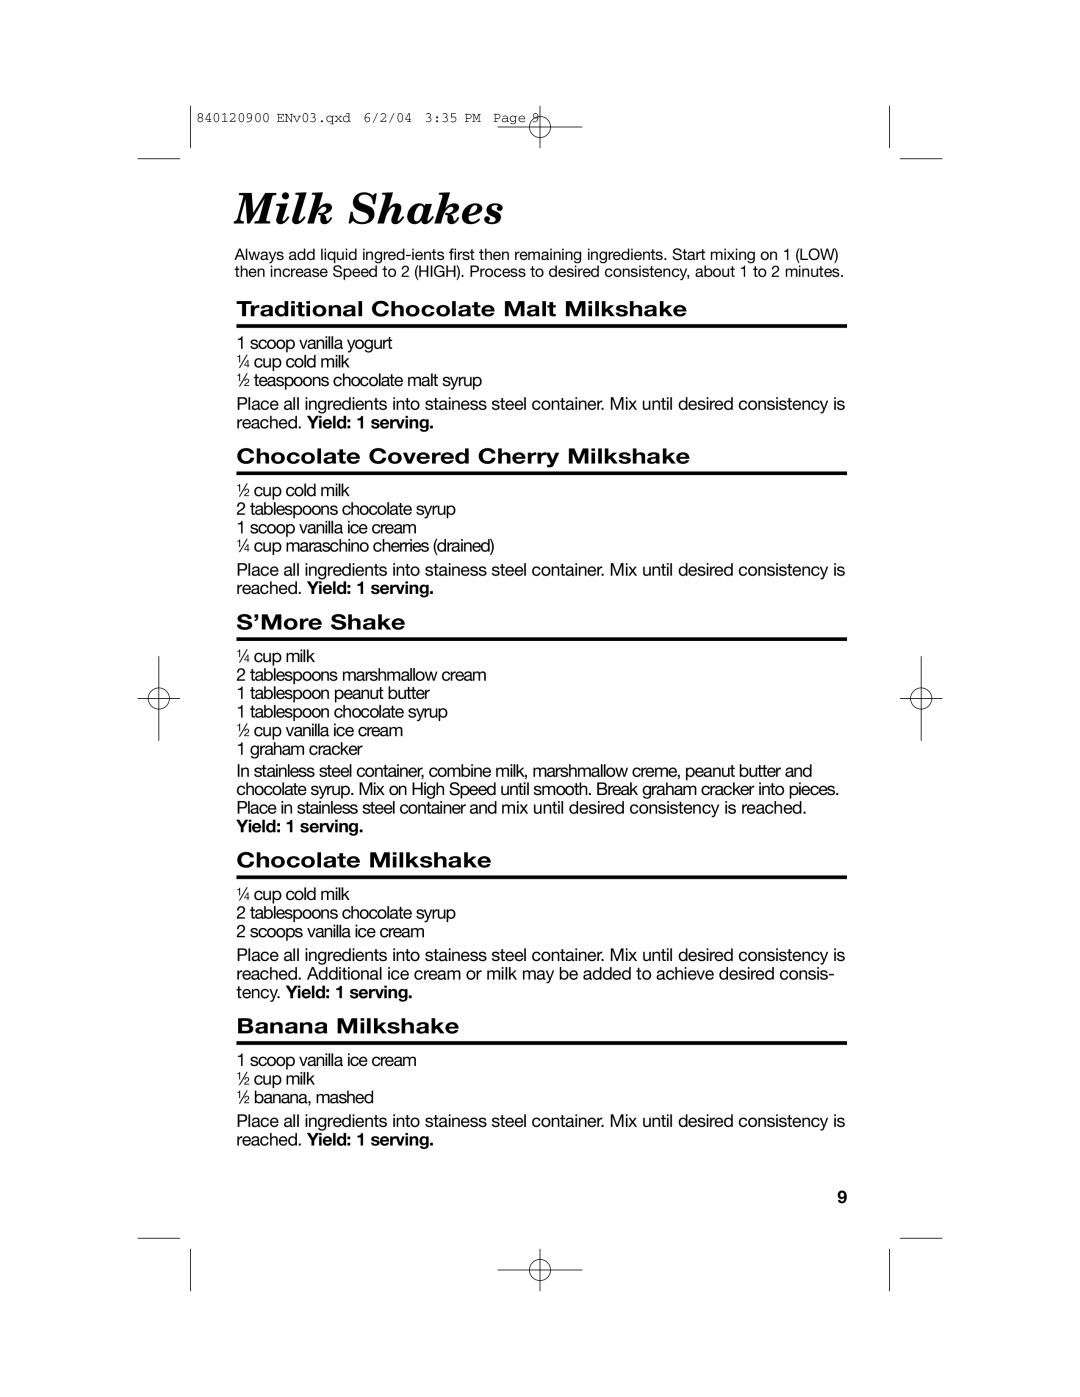 Hamilton Beach ALL-METAL DRINK MIXER Milk Shakes, Traditional Chocolate Malt Milkshake, Chocolate Covered Cherry Milkshake 